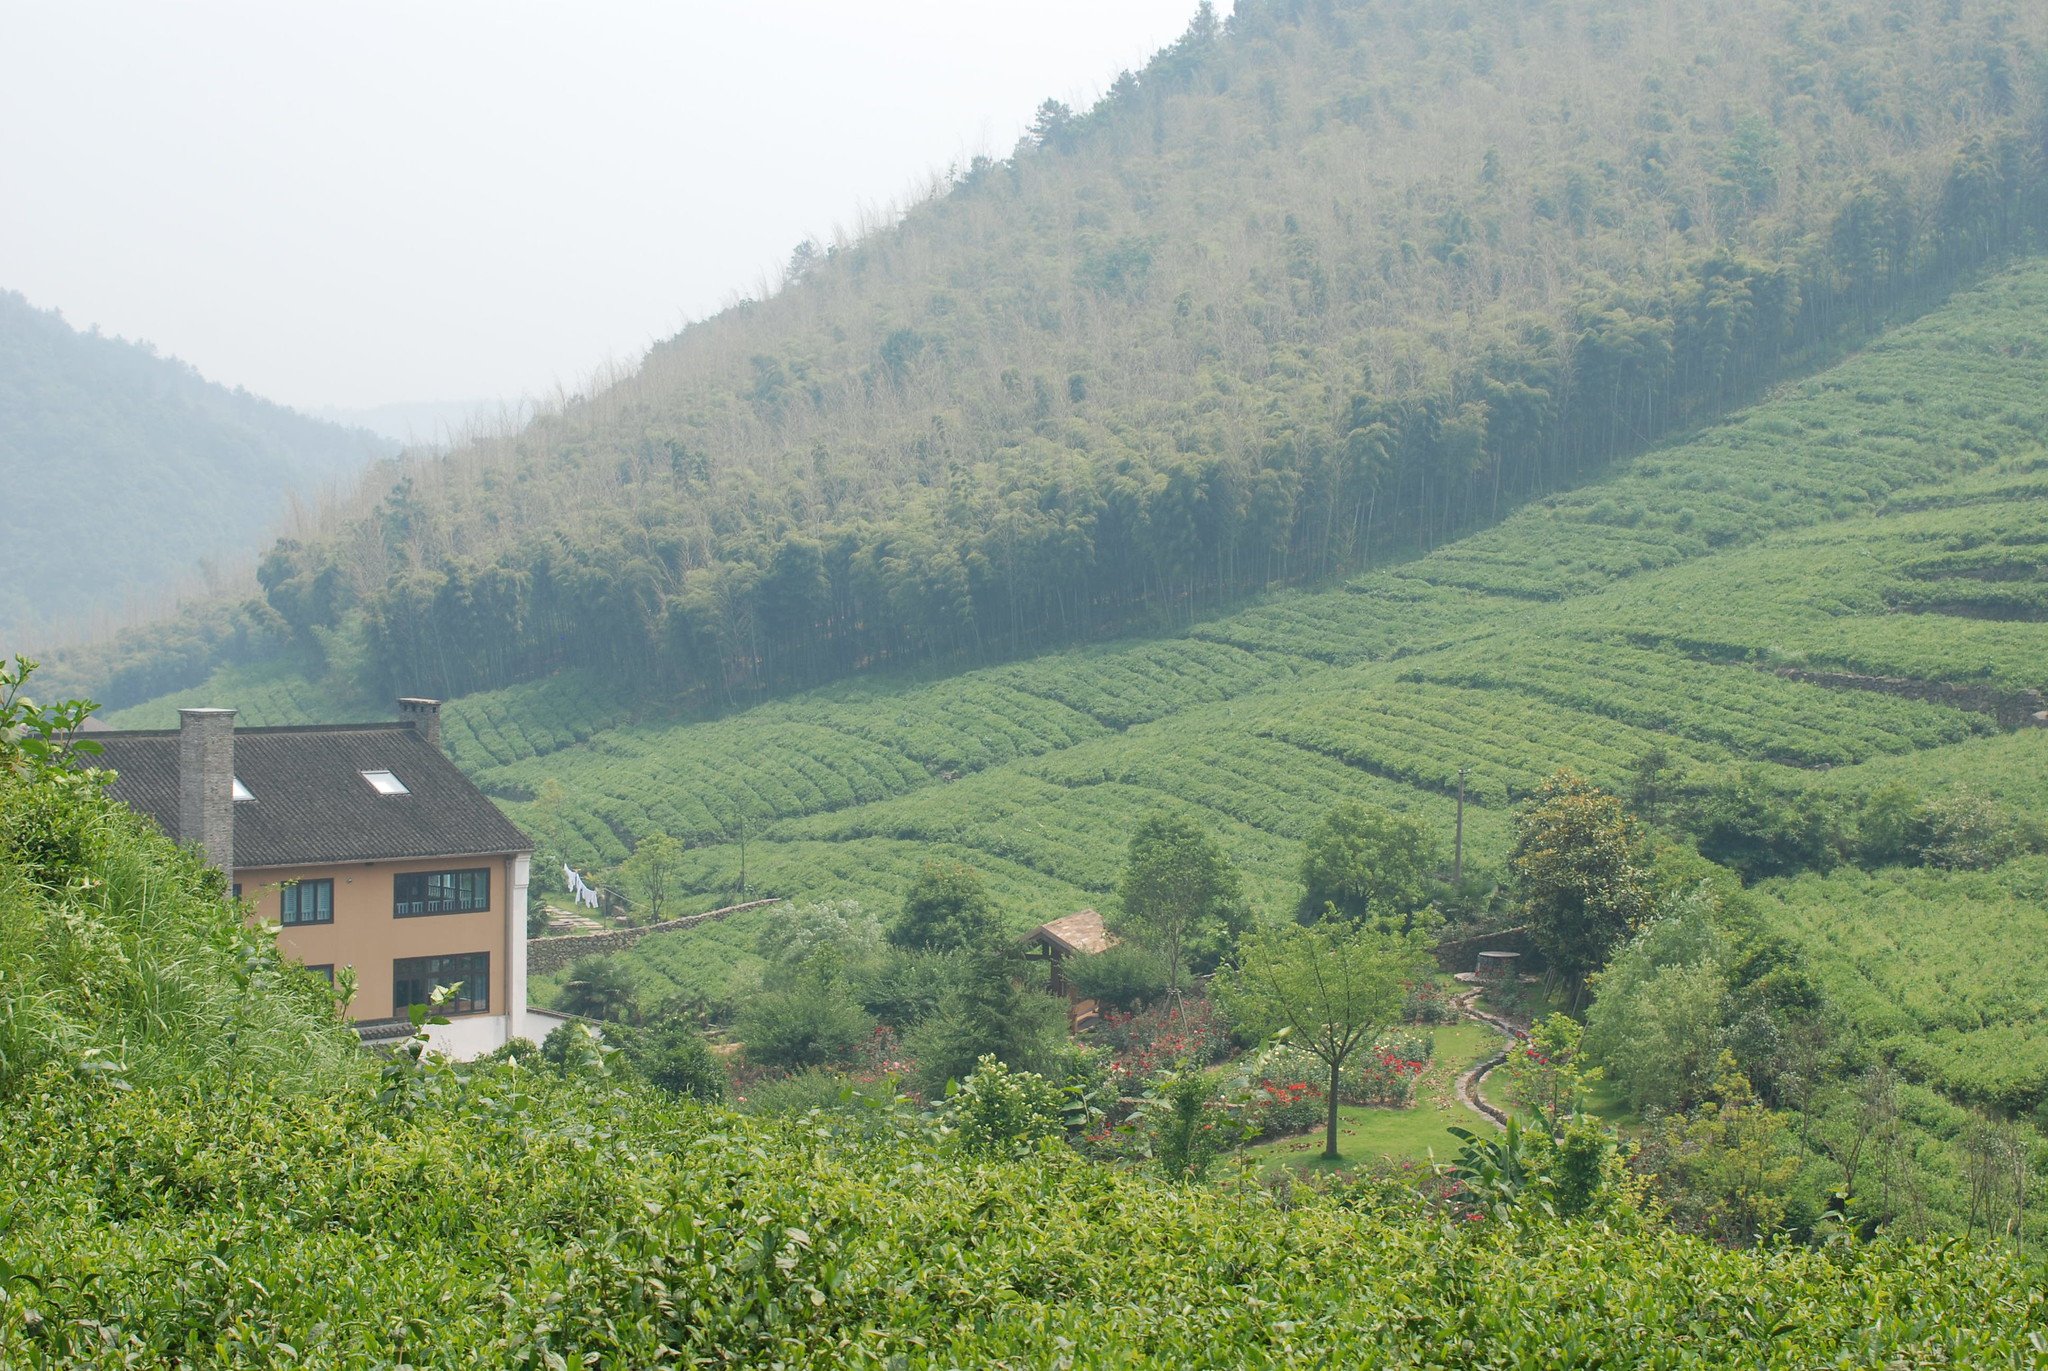 Retreat Surrounded by Tea Fields